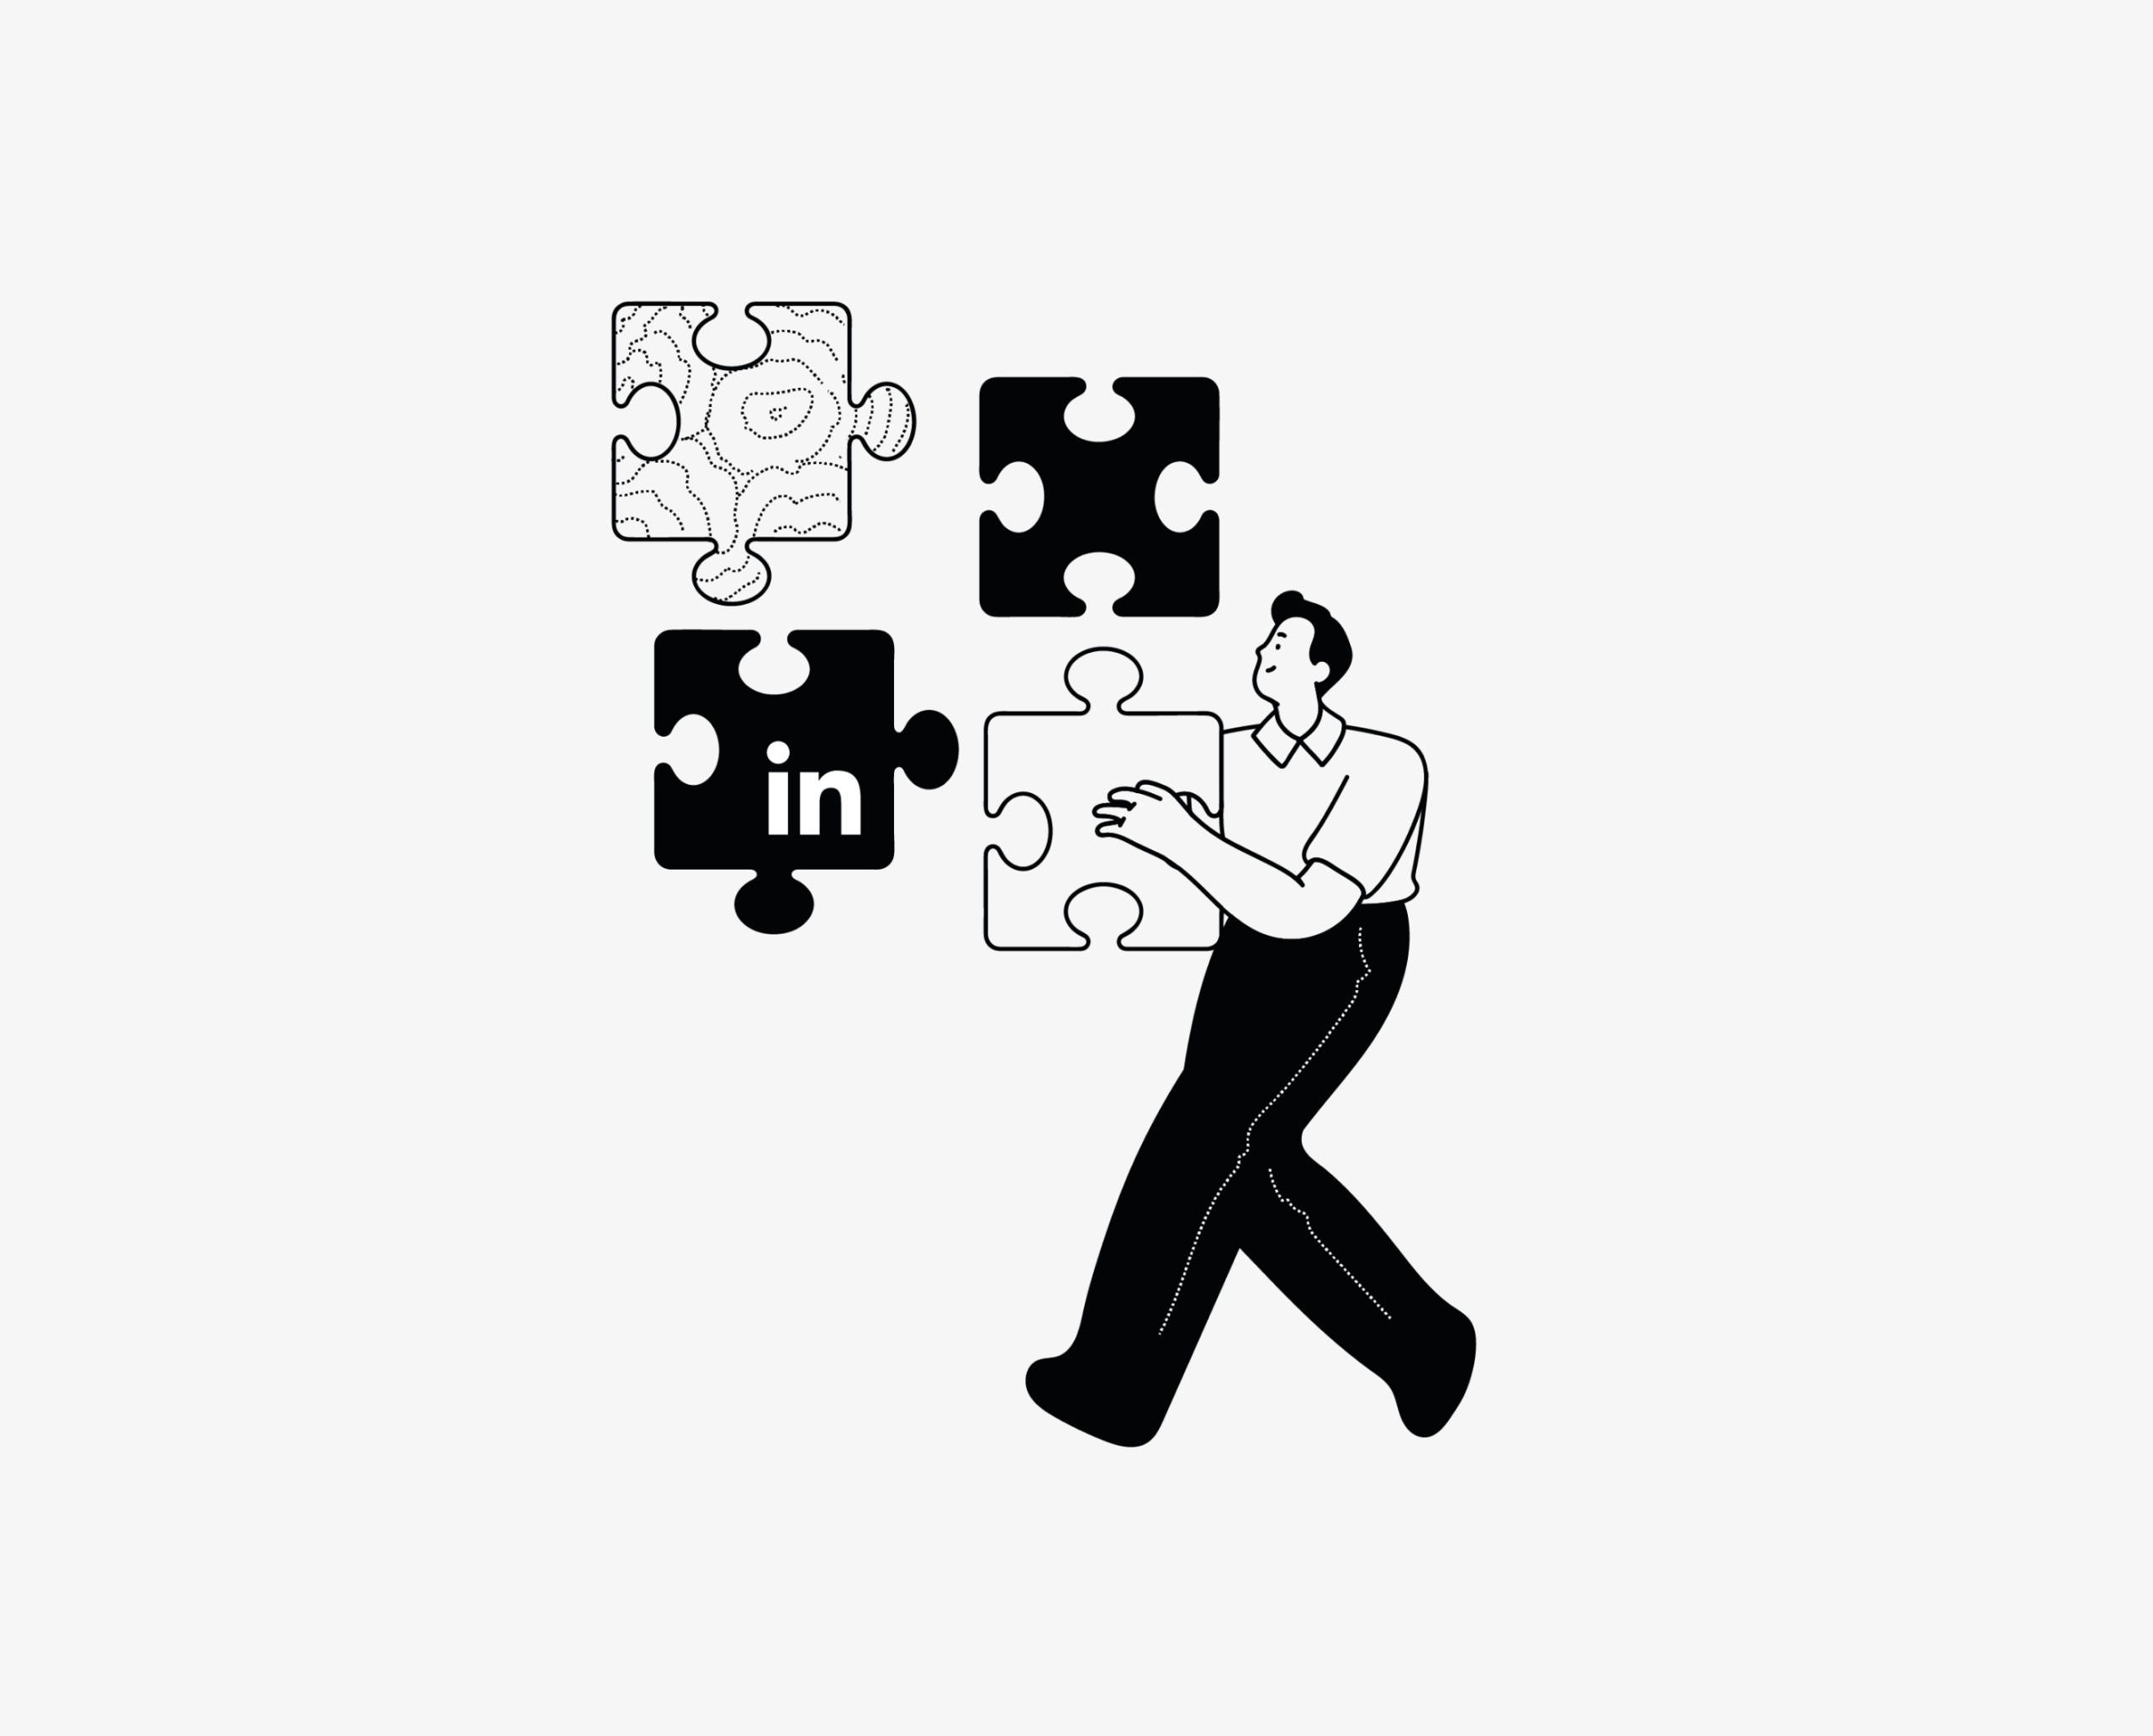 L'importance de LinkedIn Ads dans la stratégie publicitaire - The importance of LinkedIn Ads in your advertising strategy